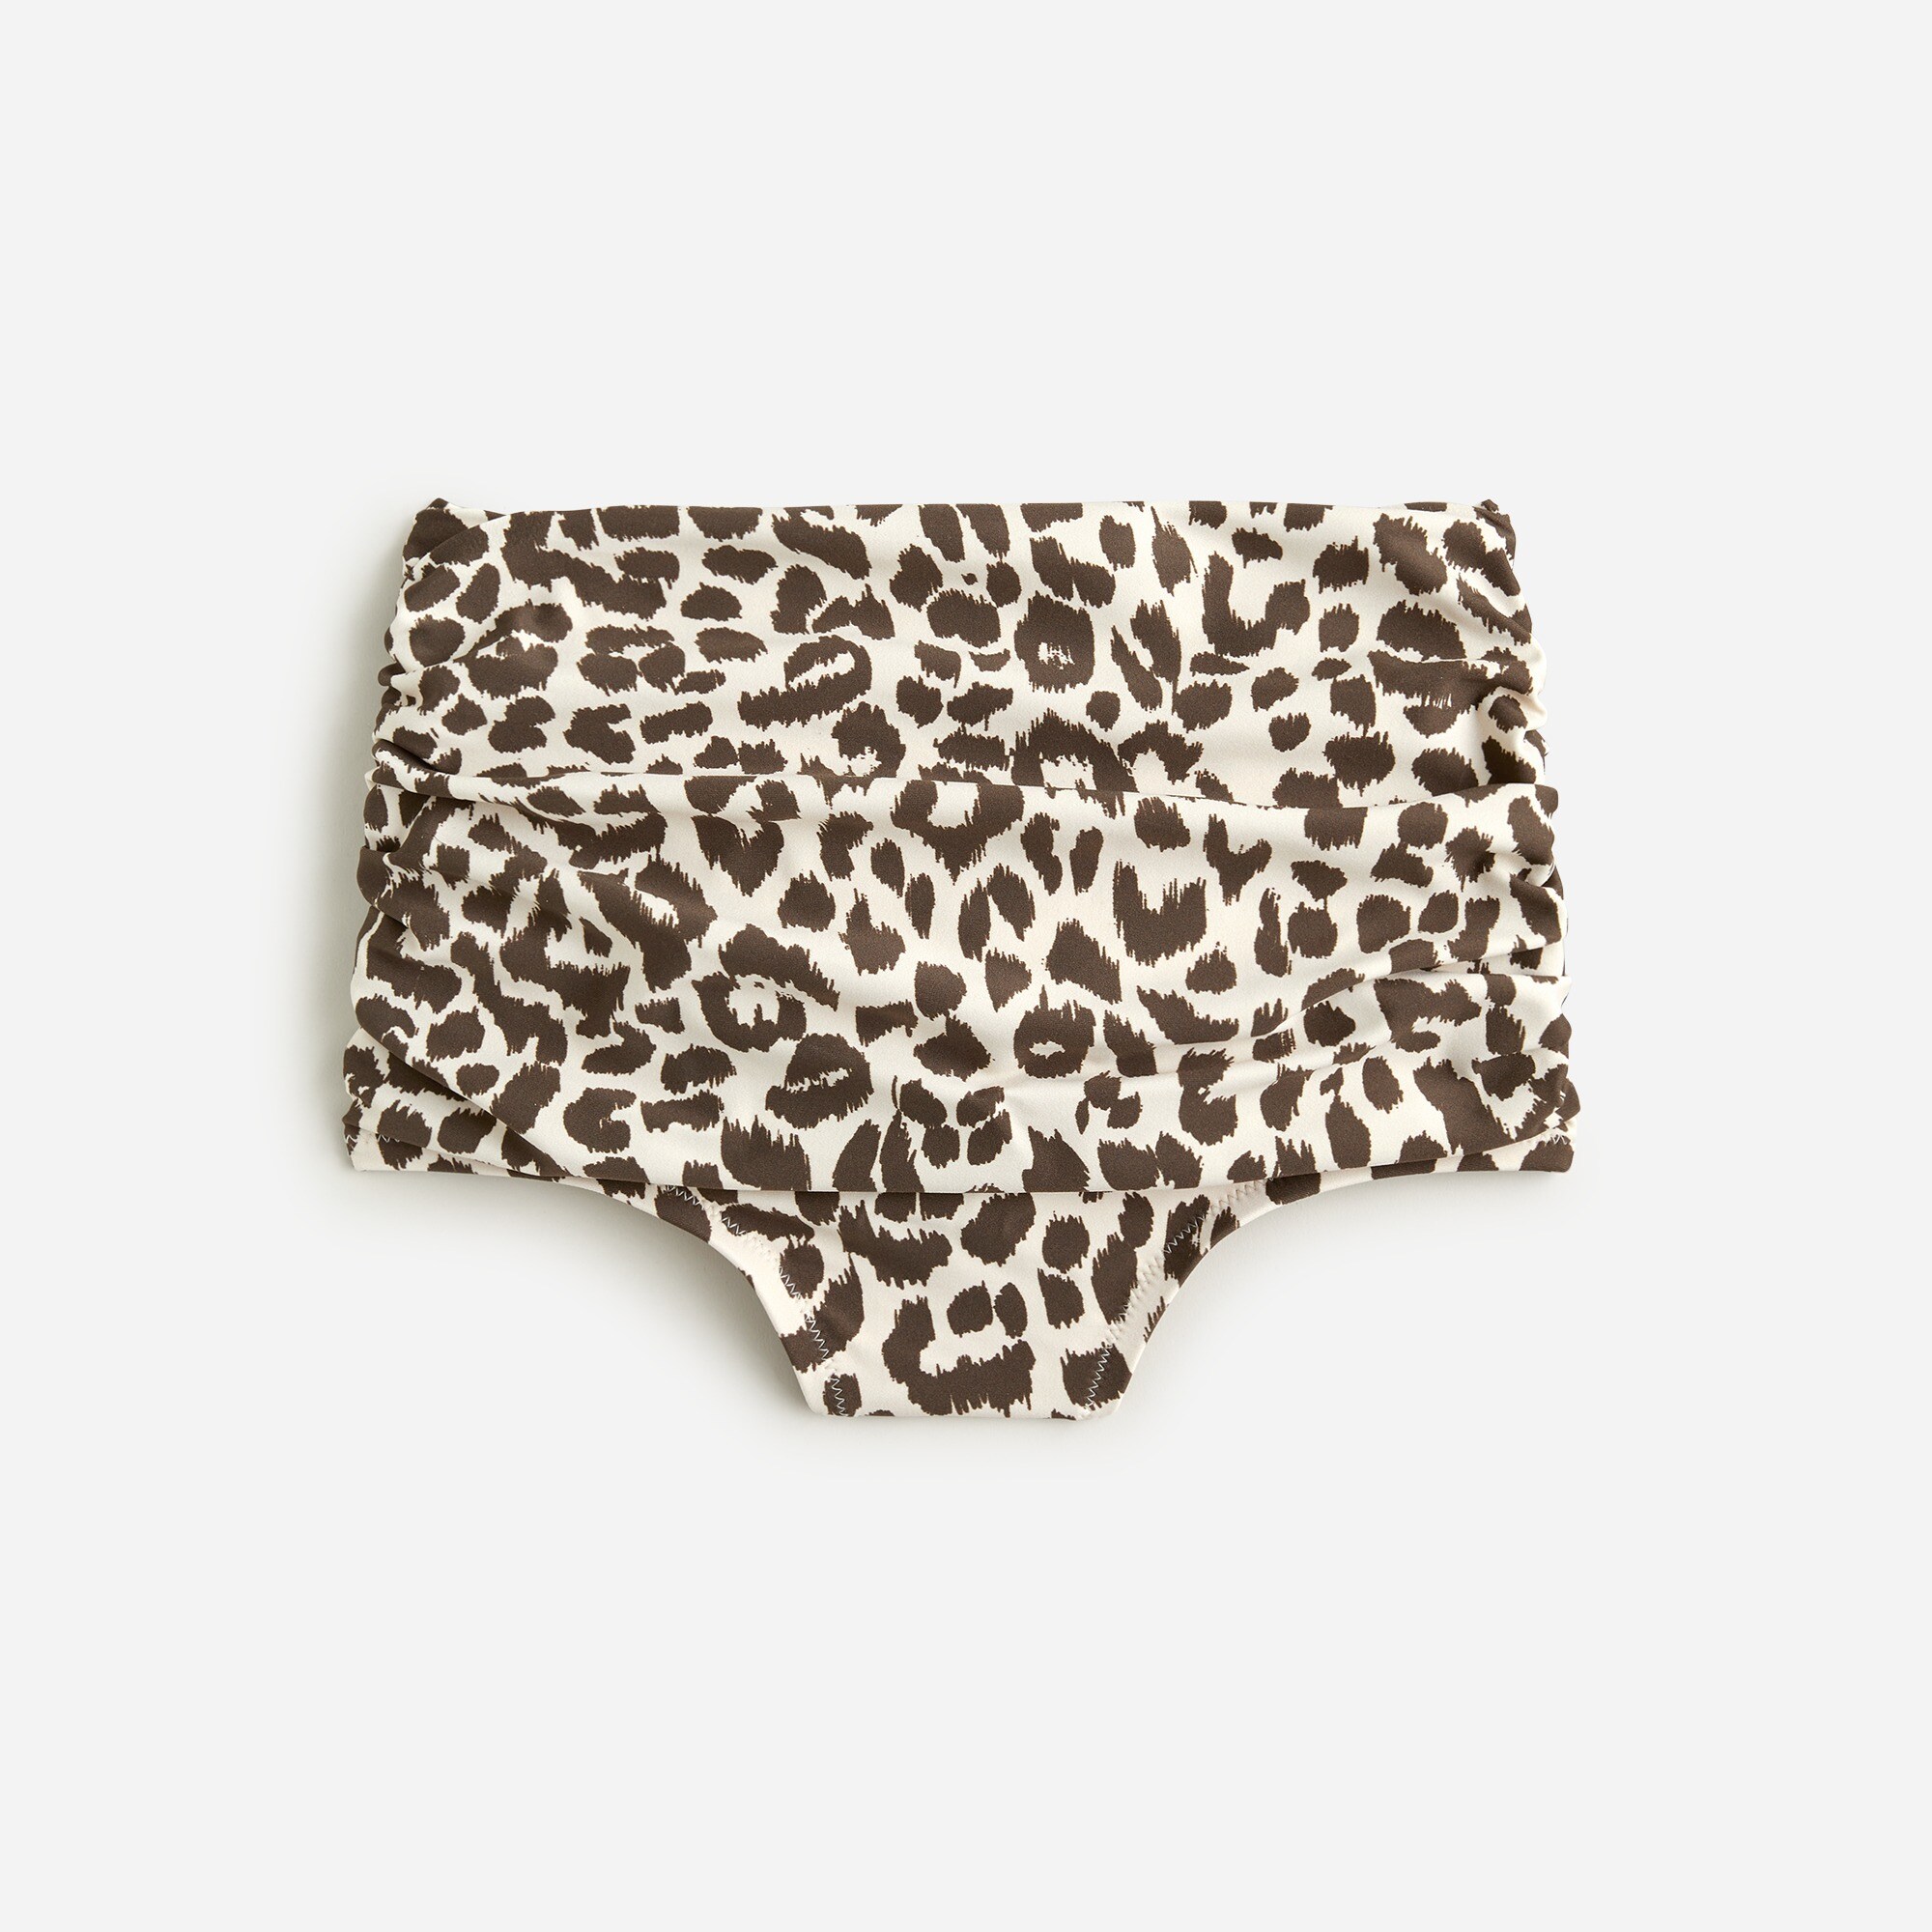  Ruched high-rise full-coverage bikini bottom in leopard